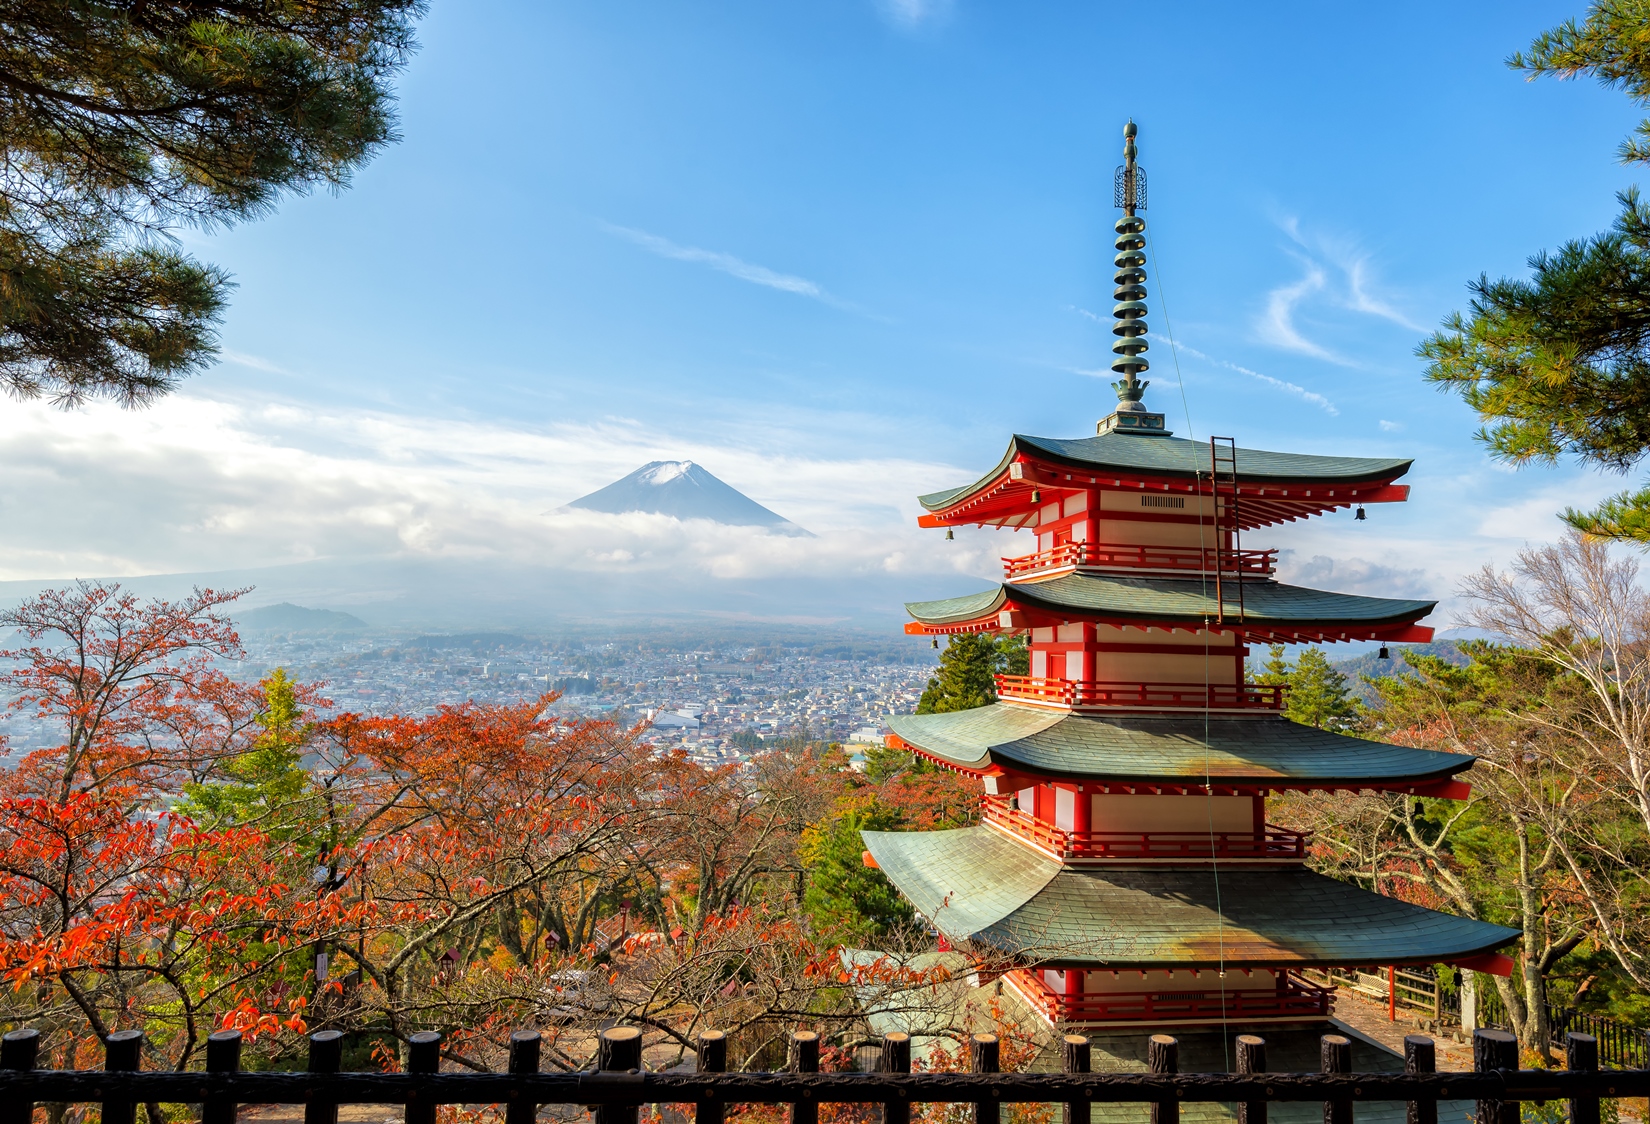 The five storied Chureito Pagoda on the mountainside overlooking Fujiyoshida City and Mount Fuji 